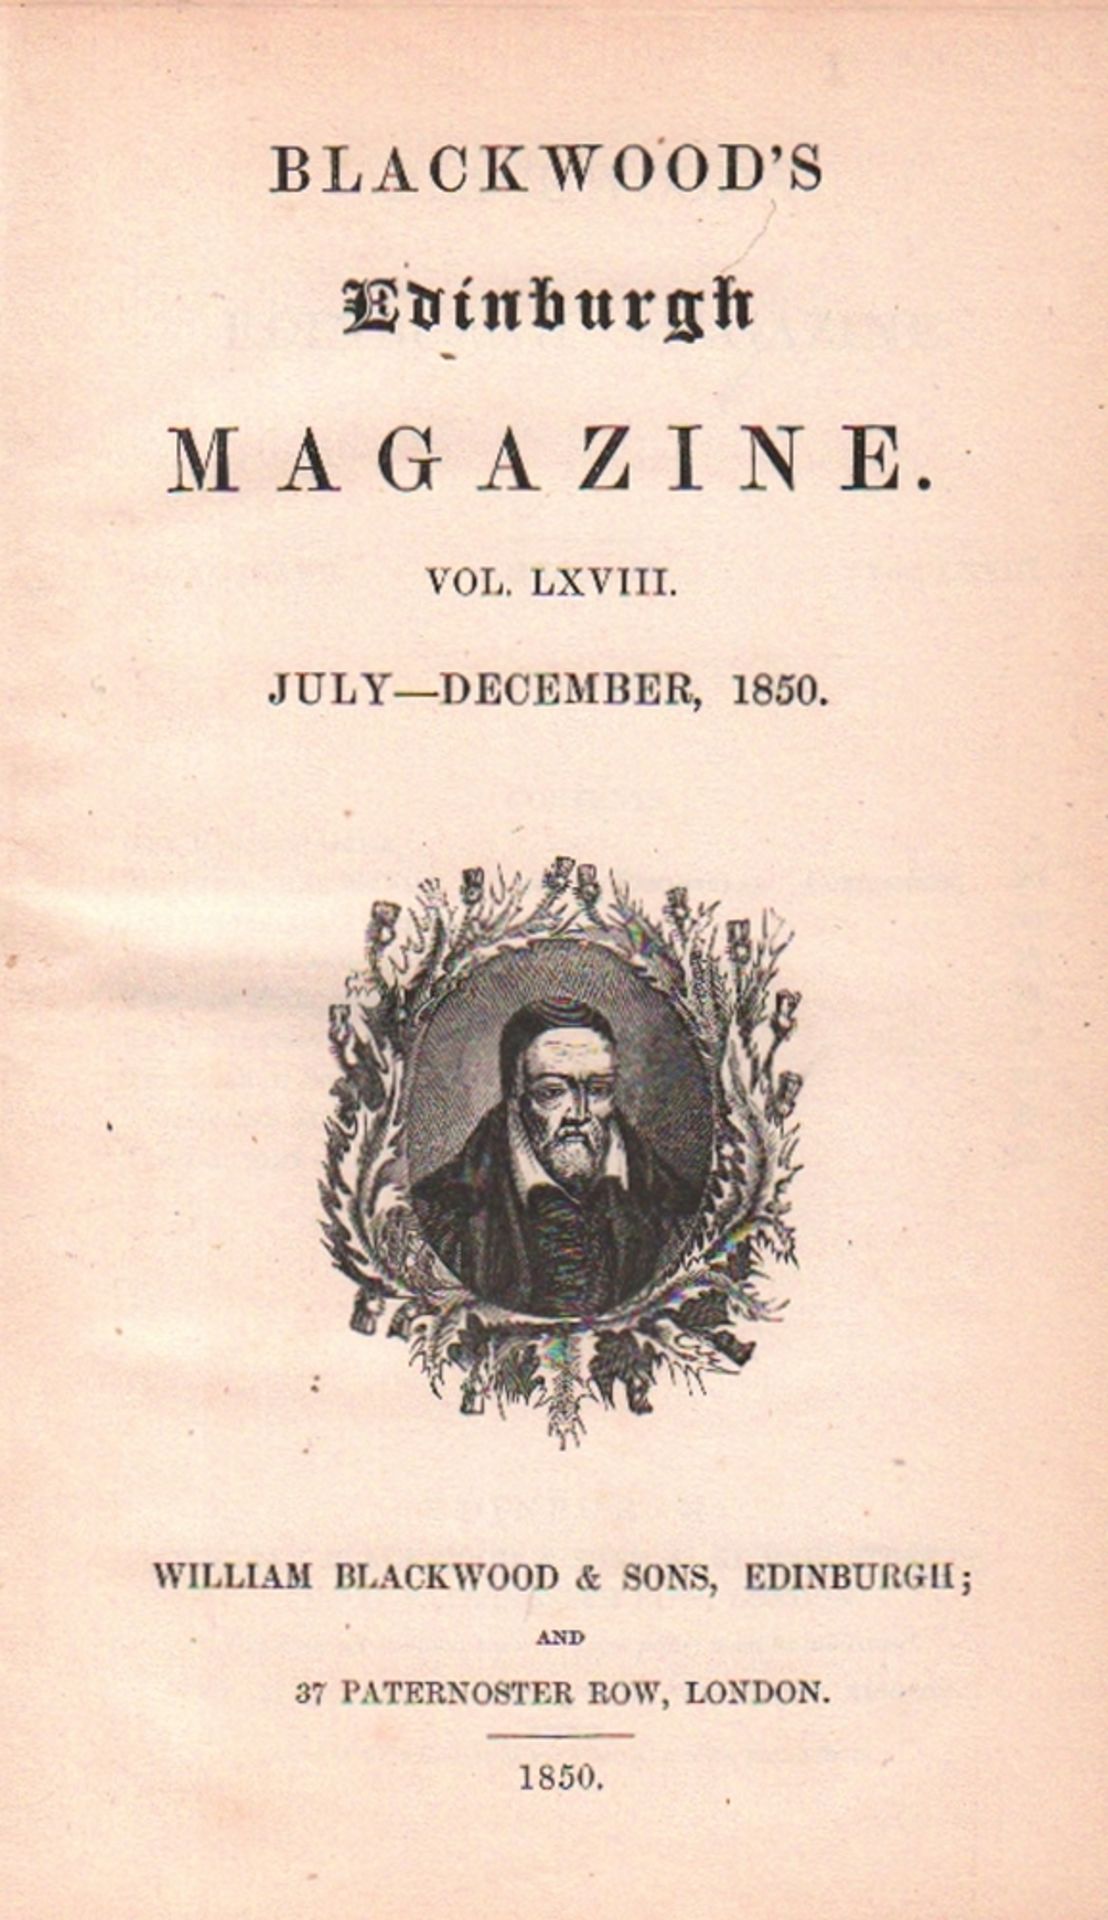 Blackwood's Edinburgh Magazine. Vol. LXVIII from July - December 1850. Edinburgh und London,